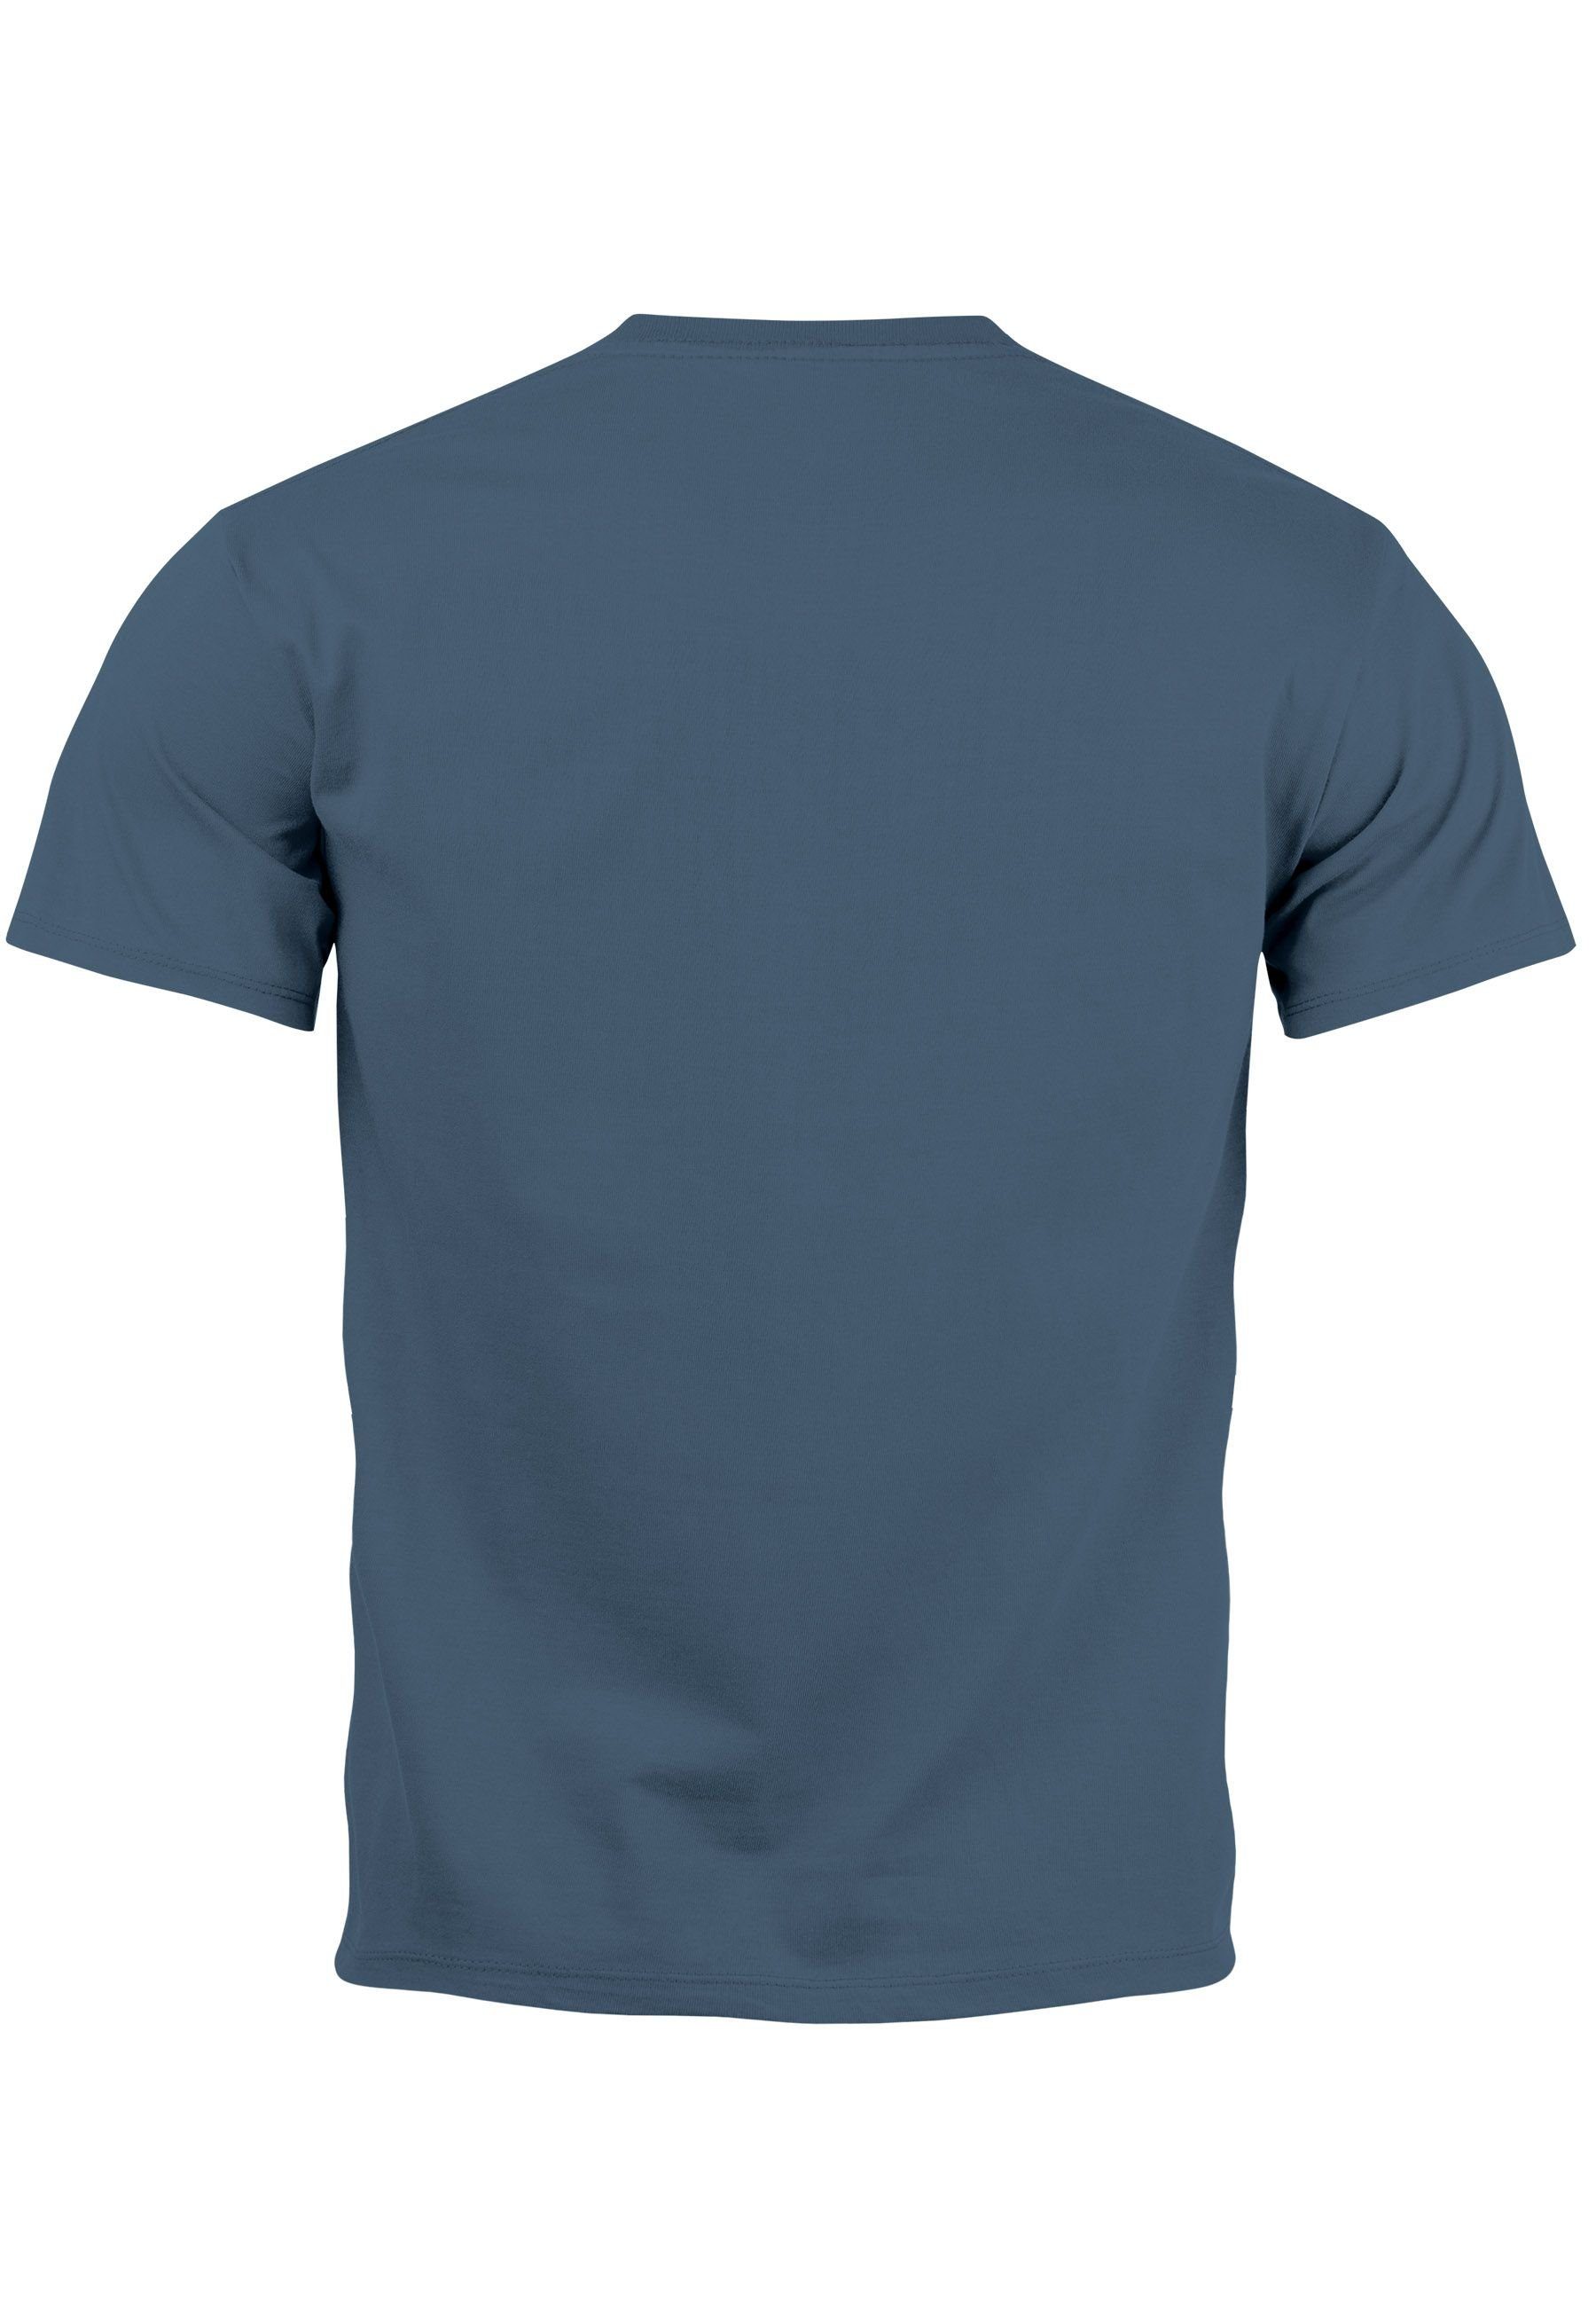 Print Print-Shirt Papier-Schiff Aufdruck Boot blue Herren Print Origami mit T-Shirt Neverless Polygon denim Fashi